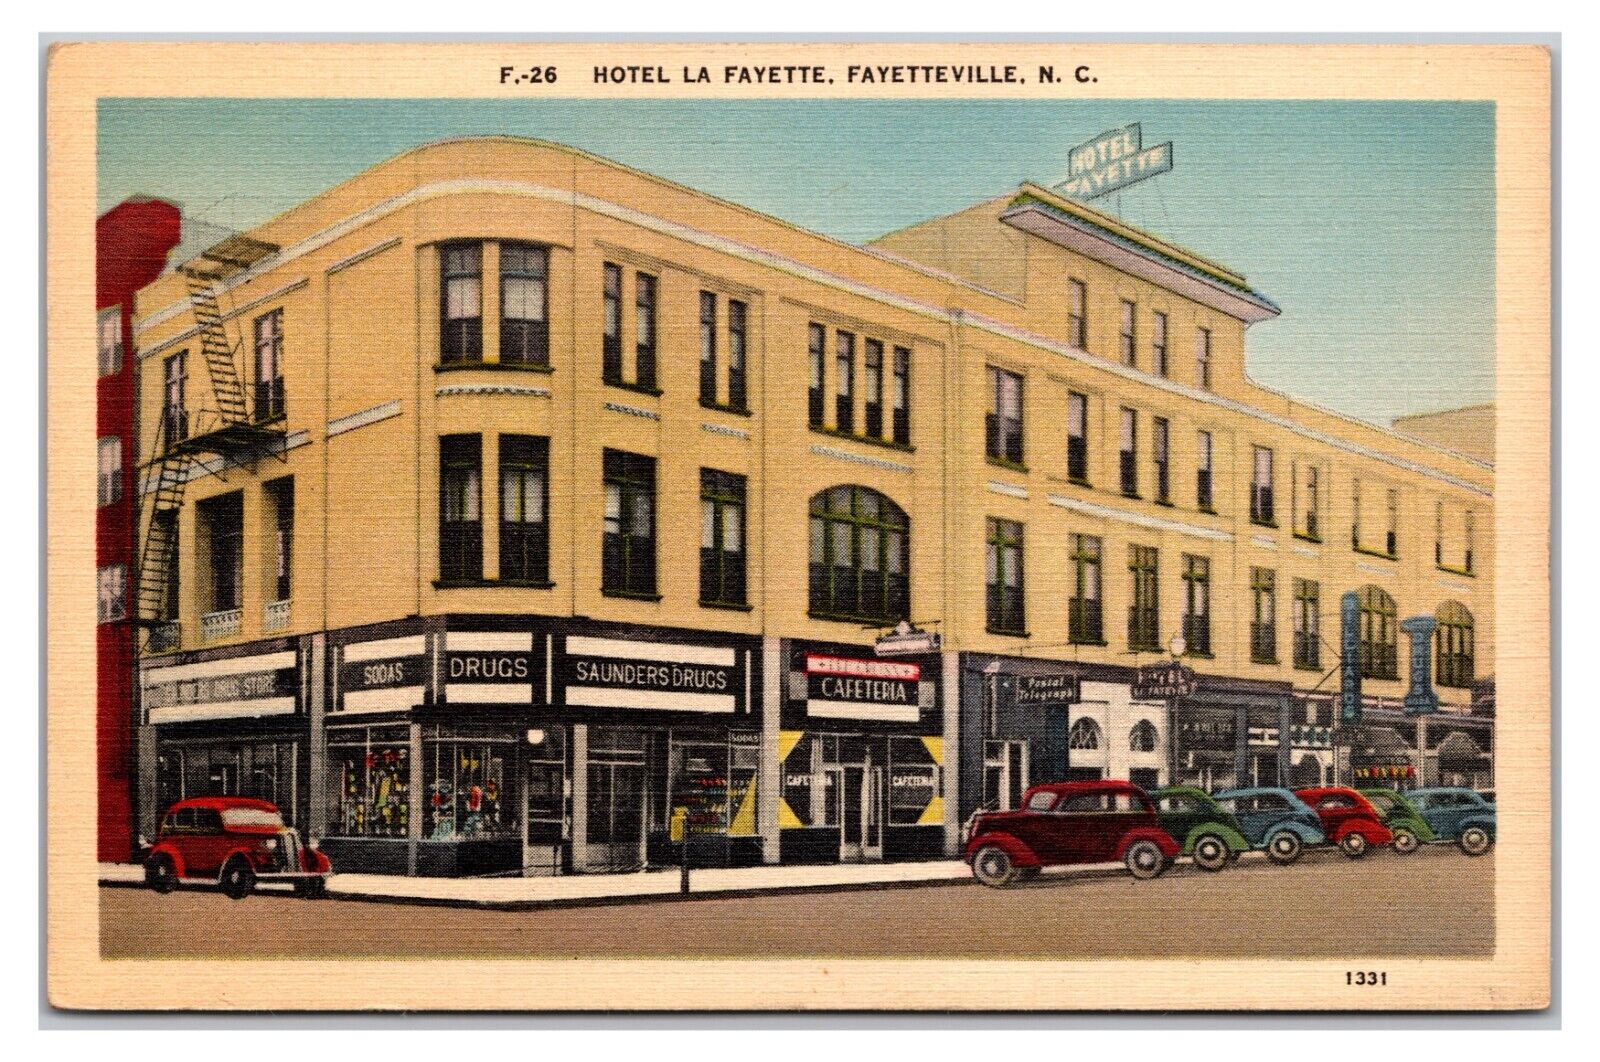 VTG 1930s - Hotel La Fayette, Fayetteville, North Carolina Postcard (UnPosted)